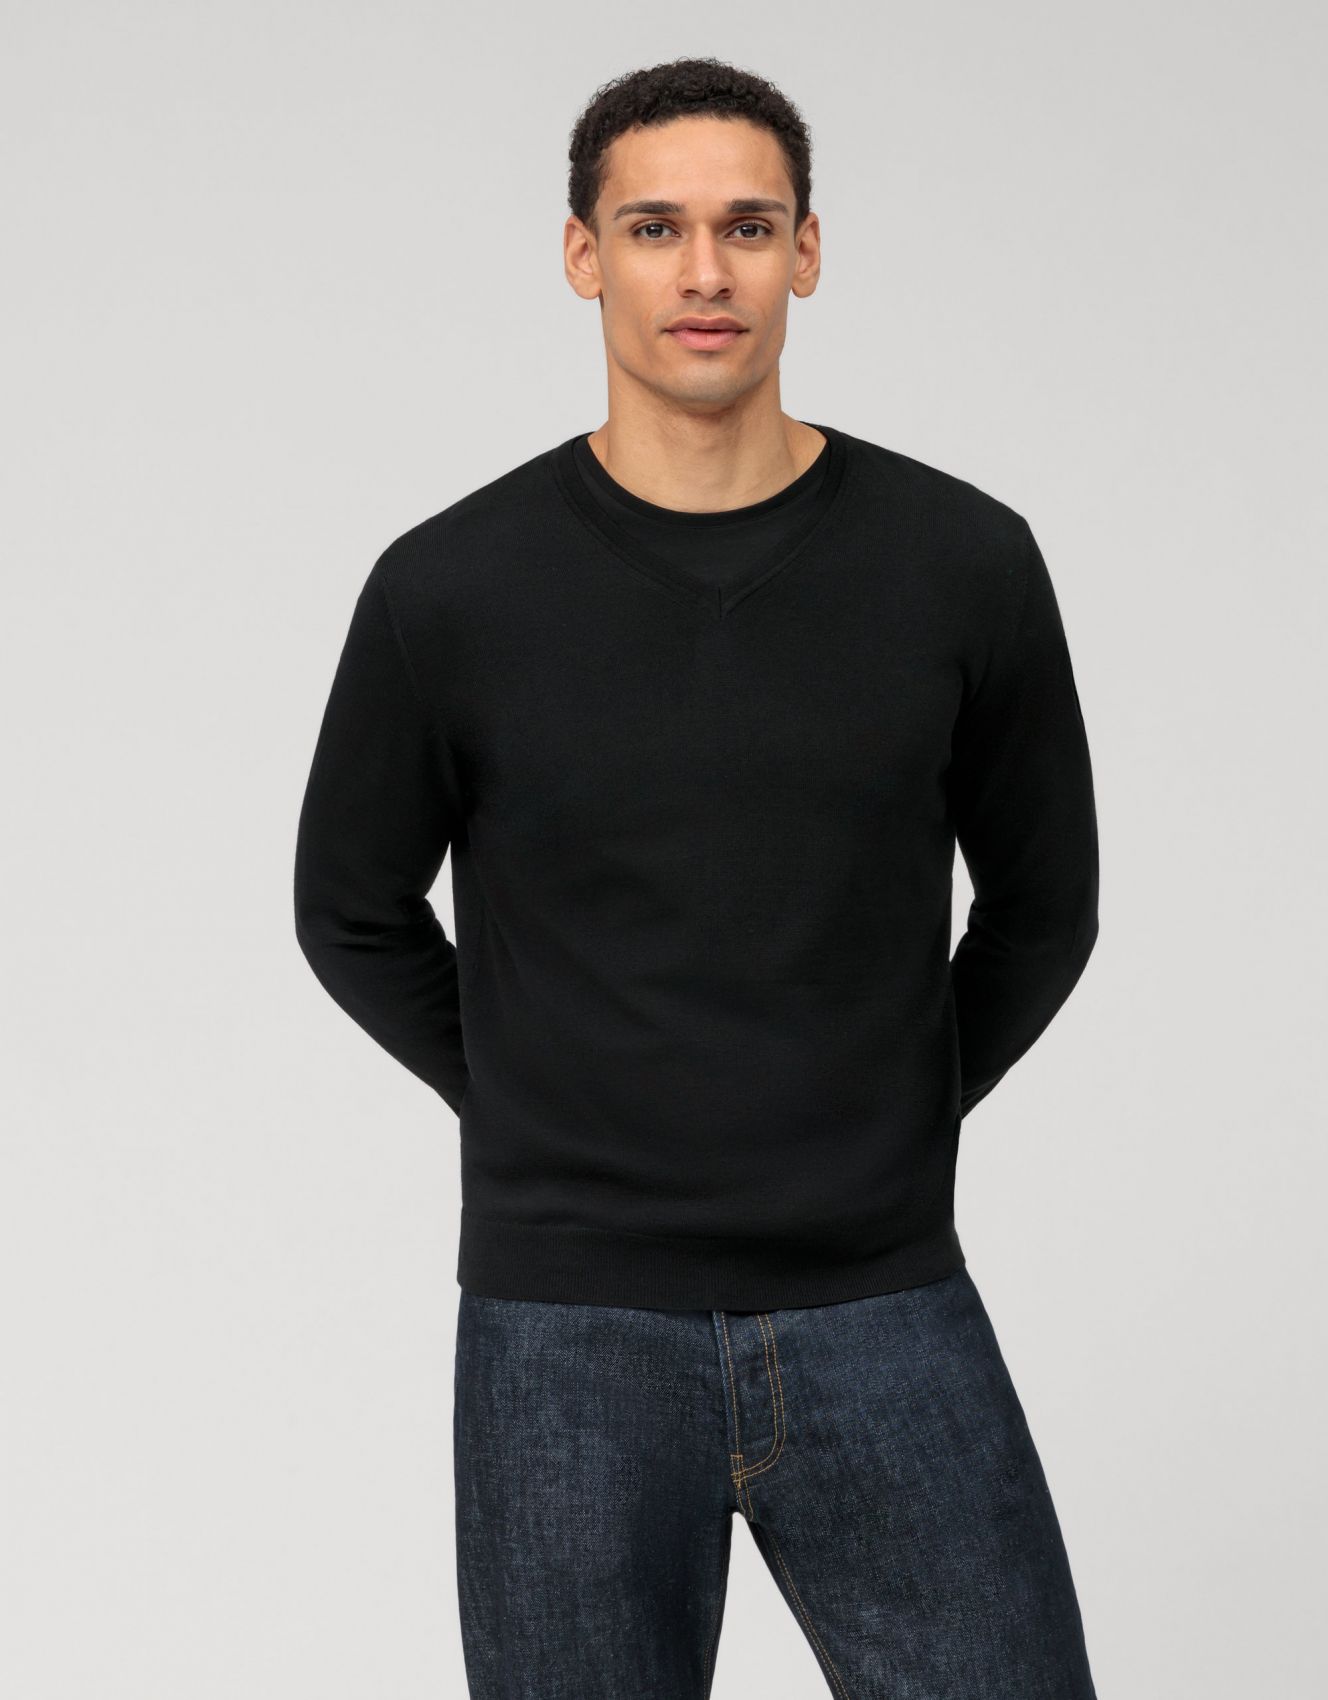 Men's Olymp V-neck Jersey Black - Extrafine Merino Wool Men's clothing